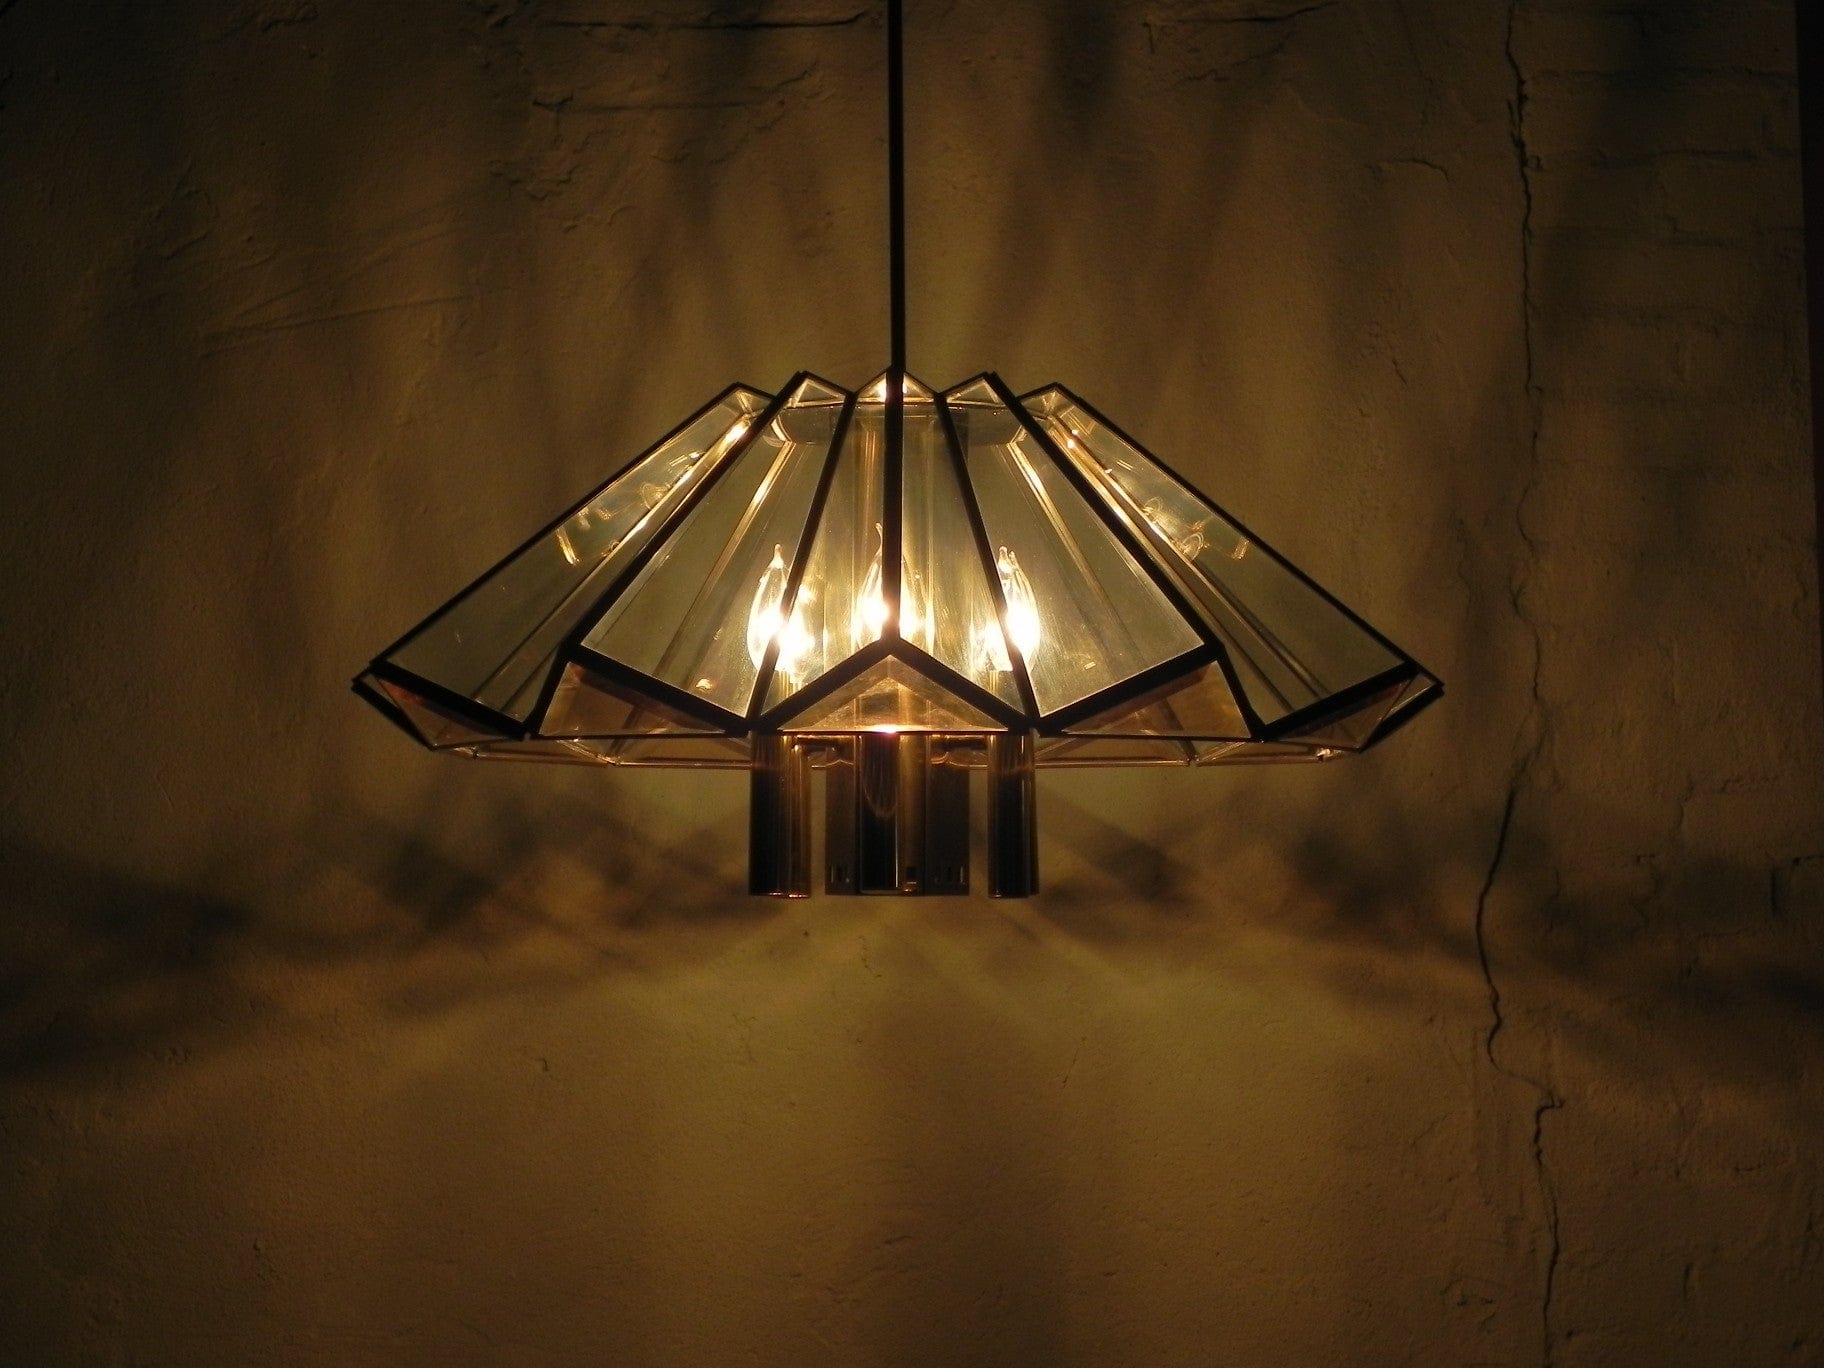 I Like Mike's Mid-Century Modern lighting Frederick Ramond Modern Angled Hanging Chandelier with 7 Bulbs